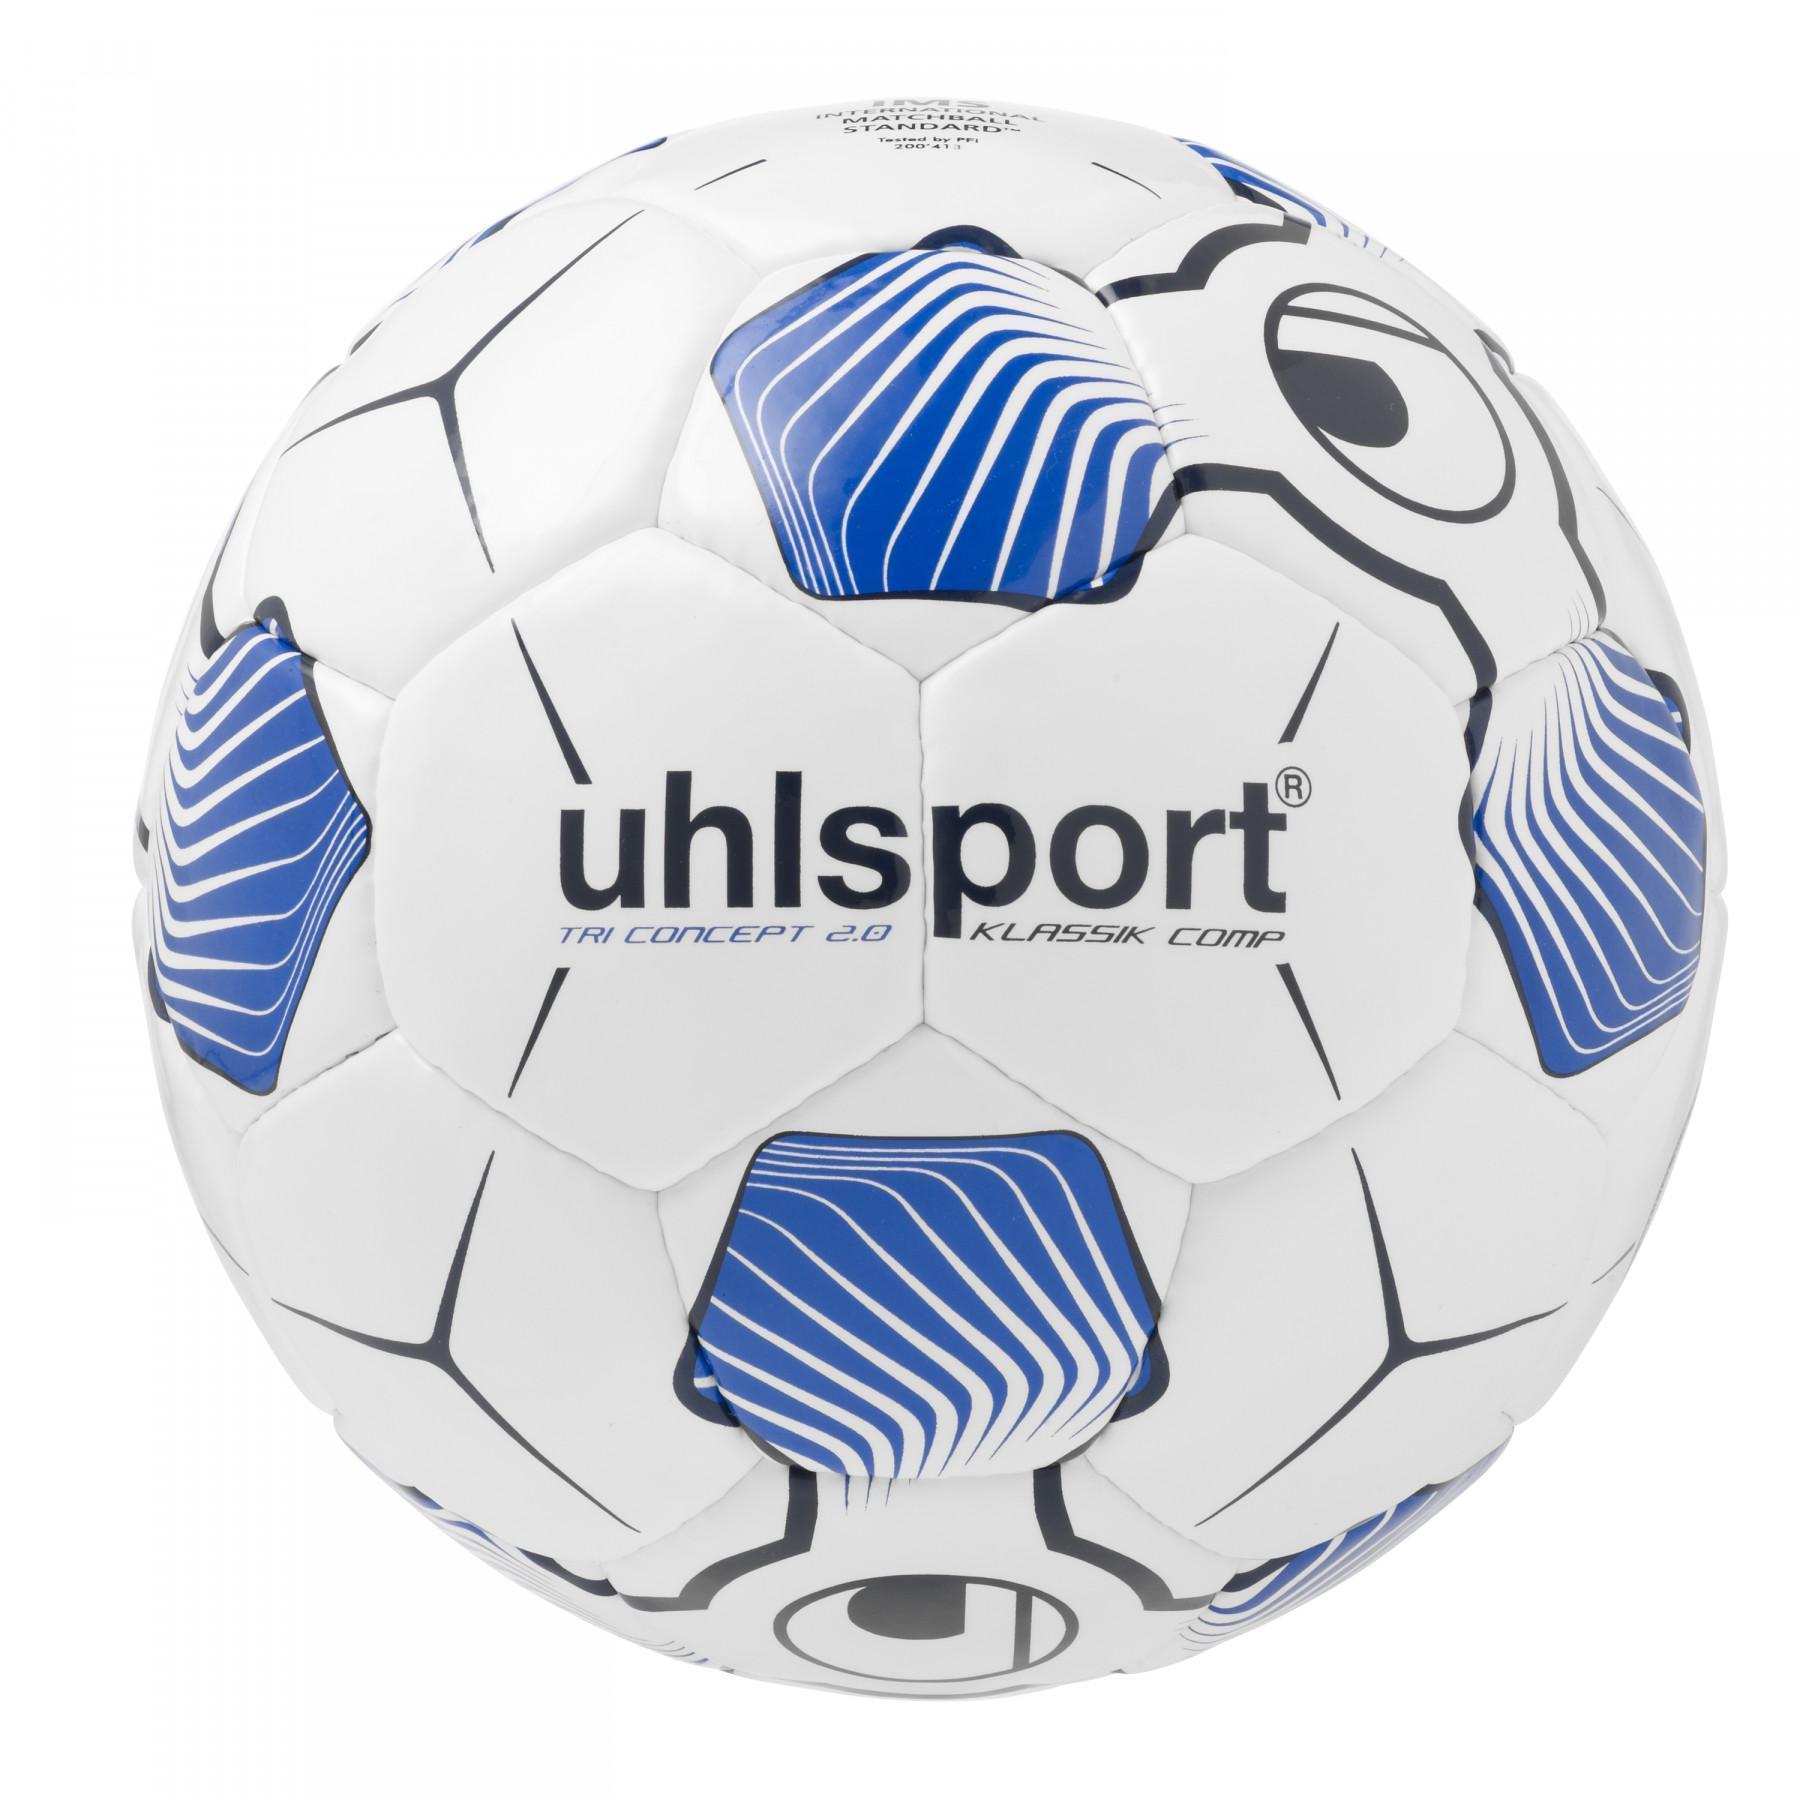 Balloon Uhlsport Tri Concept 2.0 Klassik Comp